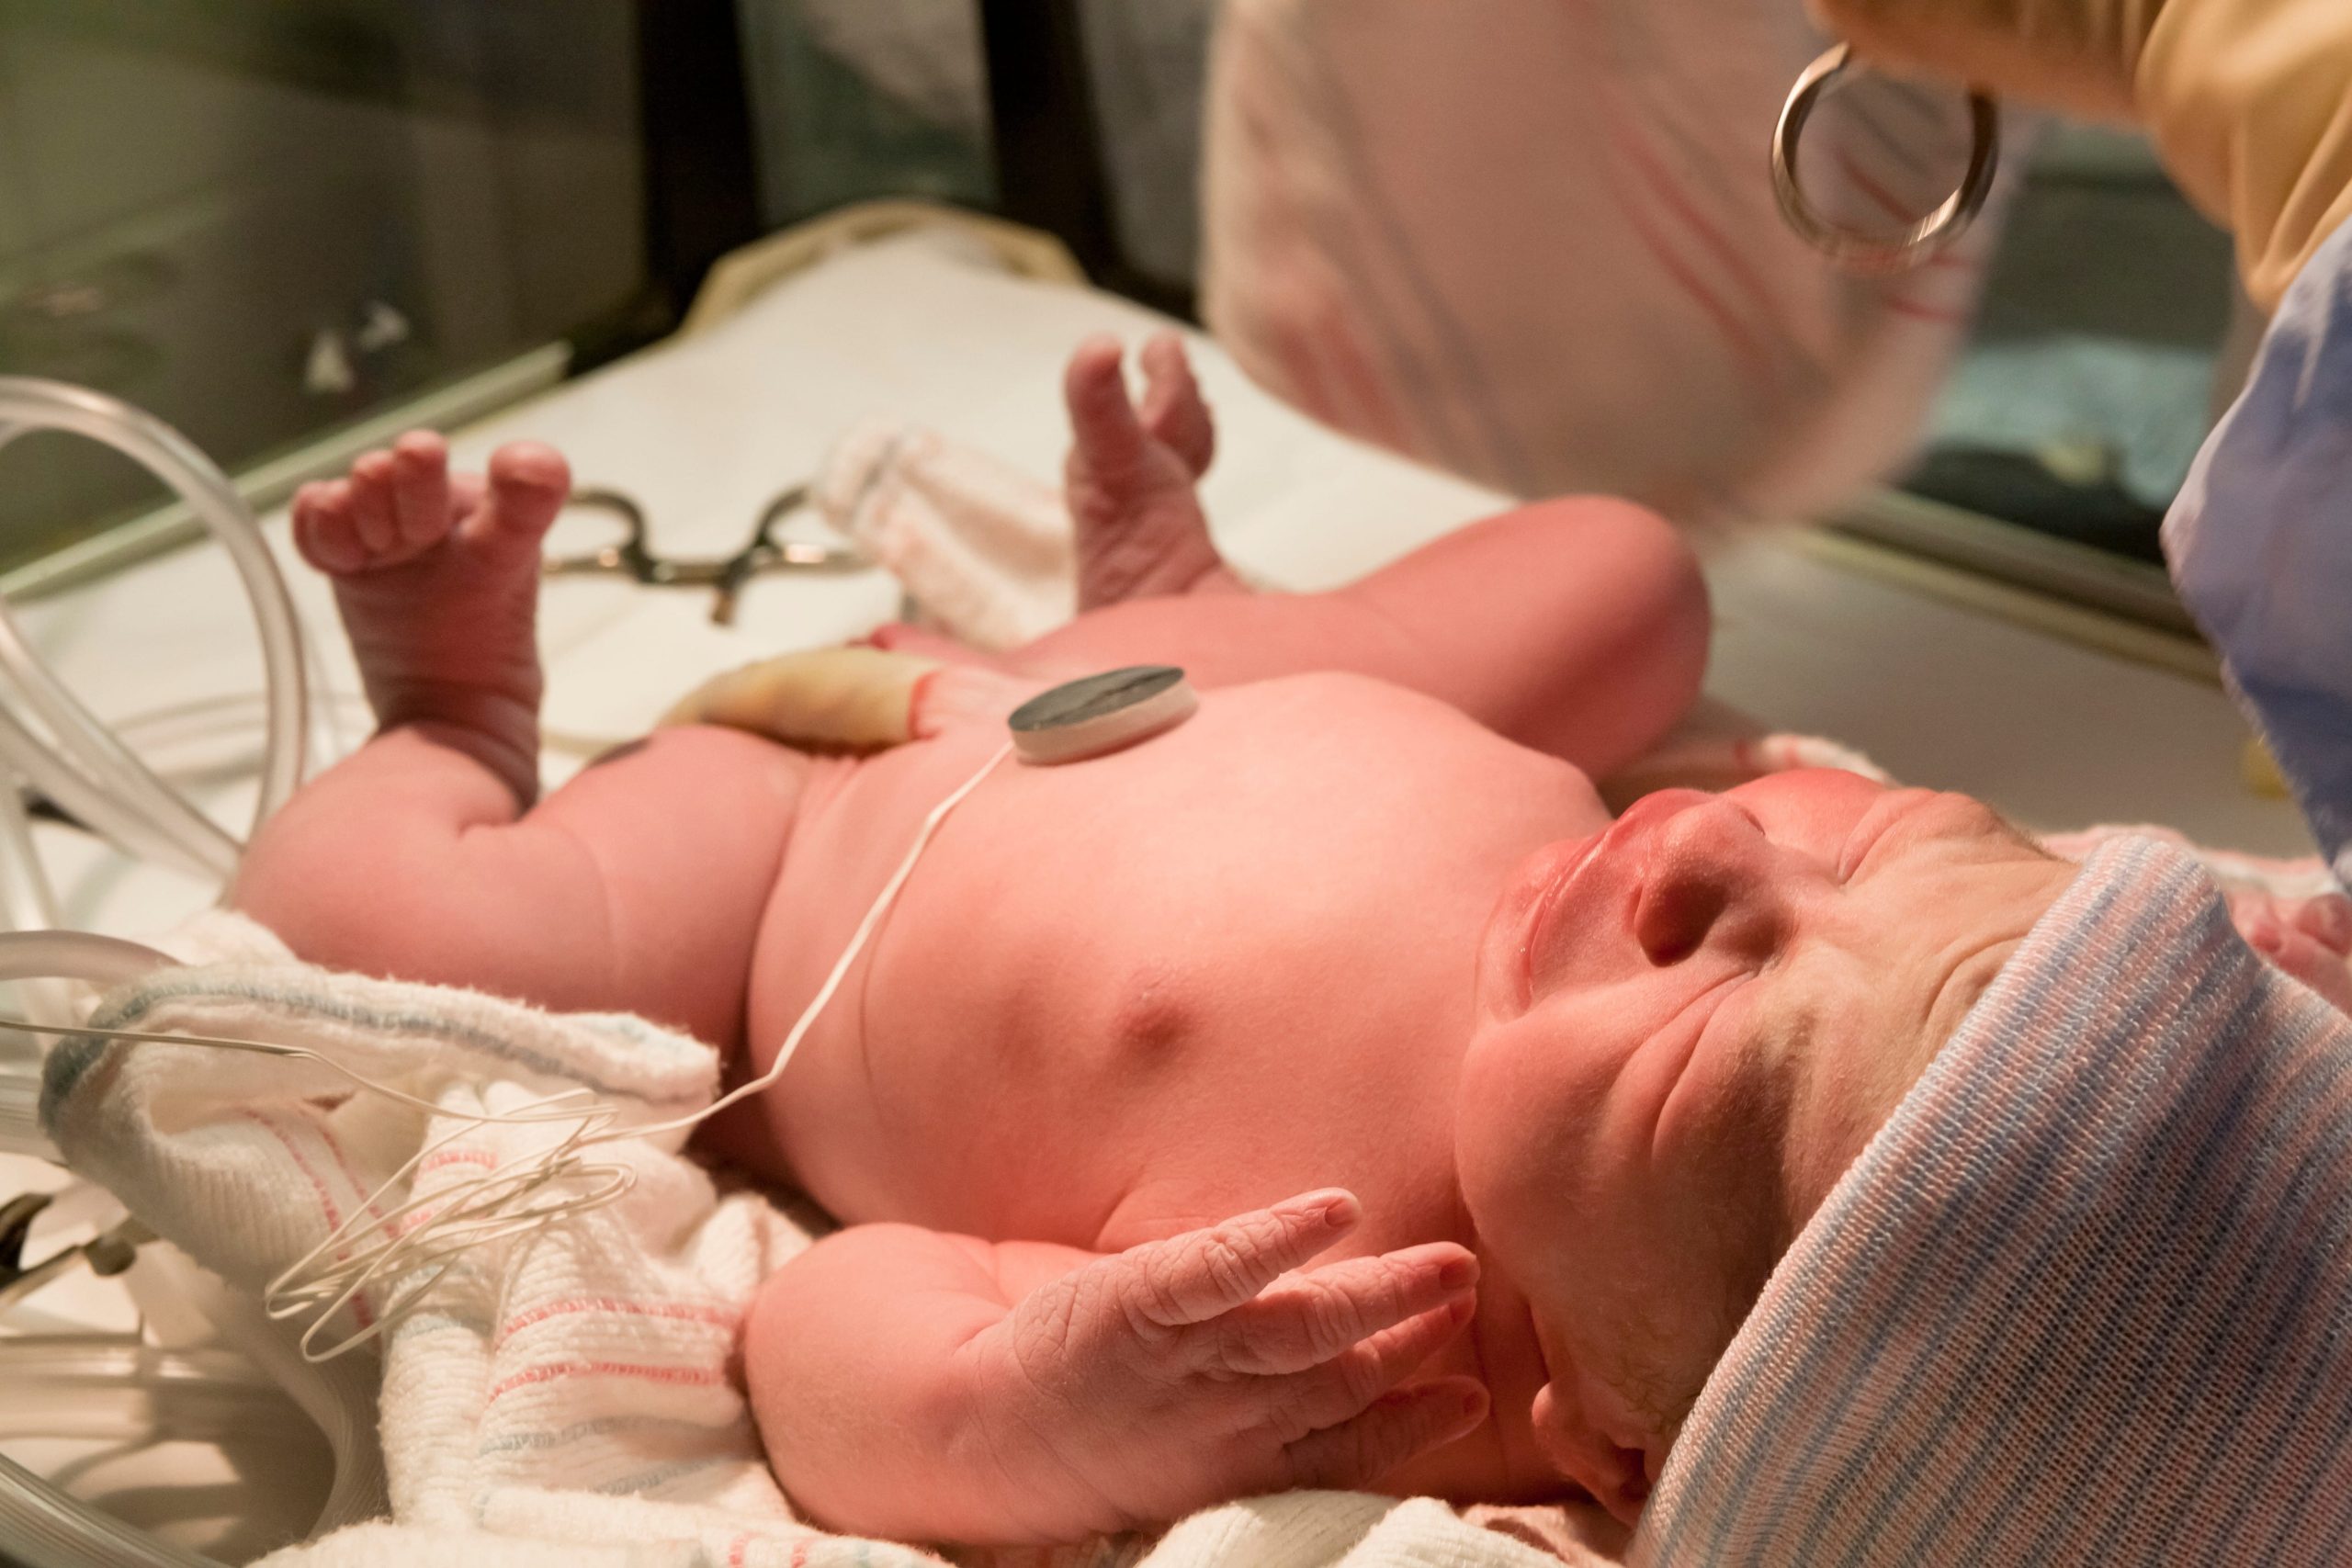 newborn-baby-in-hospital-cot-2023-11-27-05-12-41-utc-min-scaled.jpg